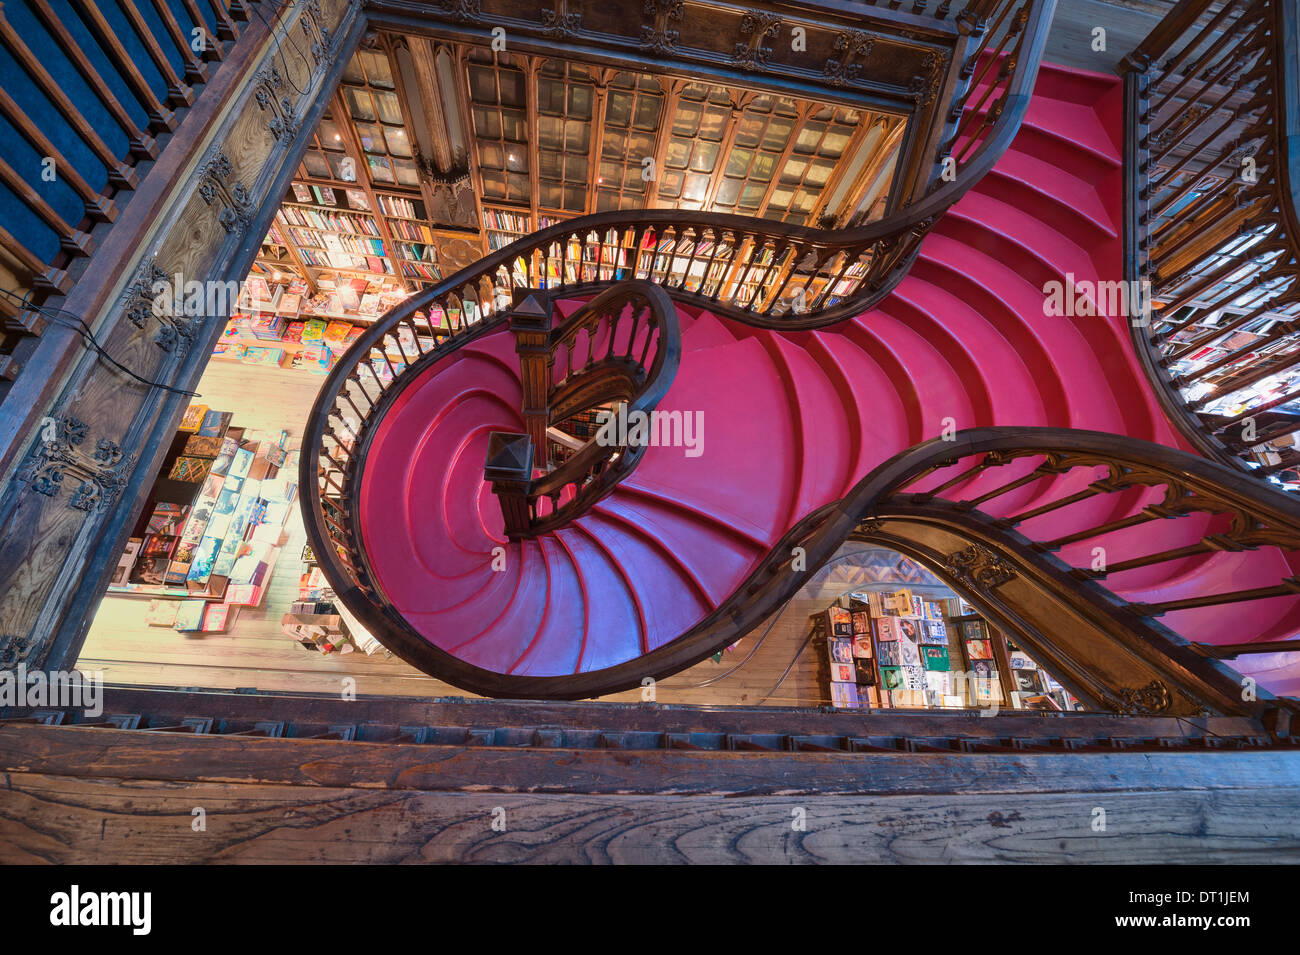 Lello and Irmao bookshop, Spiral stairs, Oporto, Portugal, Europe Stock Photo